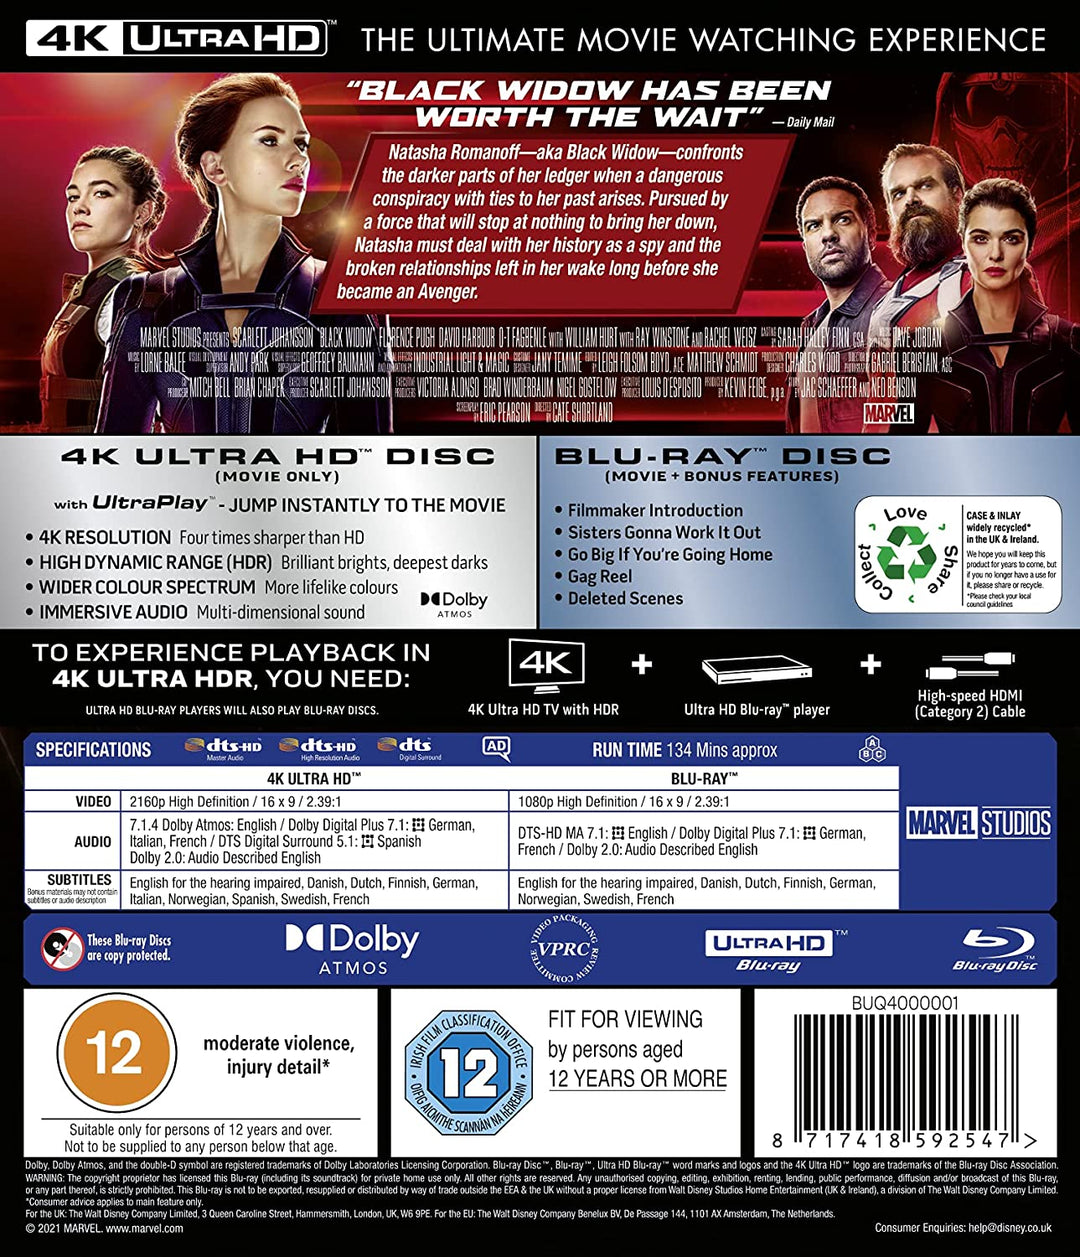 Marvel Studios Black Widow UHD – Action/Abenteuer [Blu-ray]